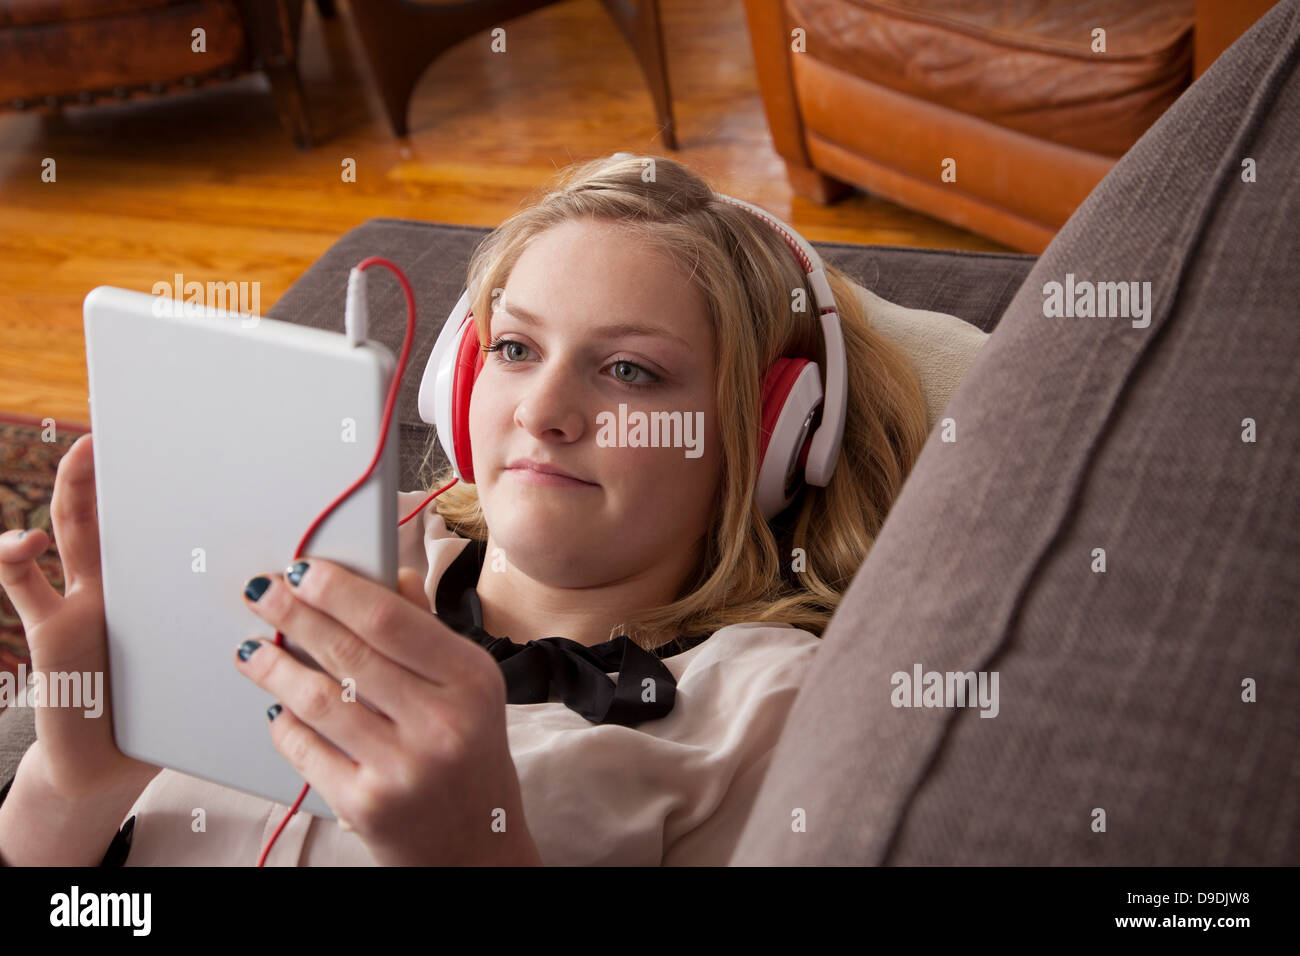 Girl lying on sofa using digital tablet Banque D'Images